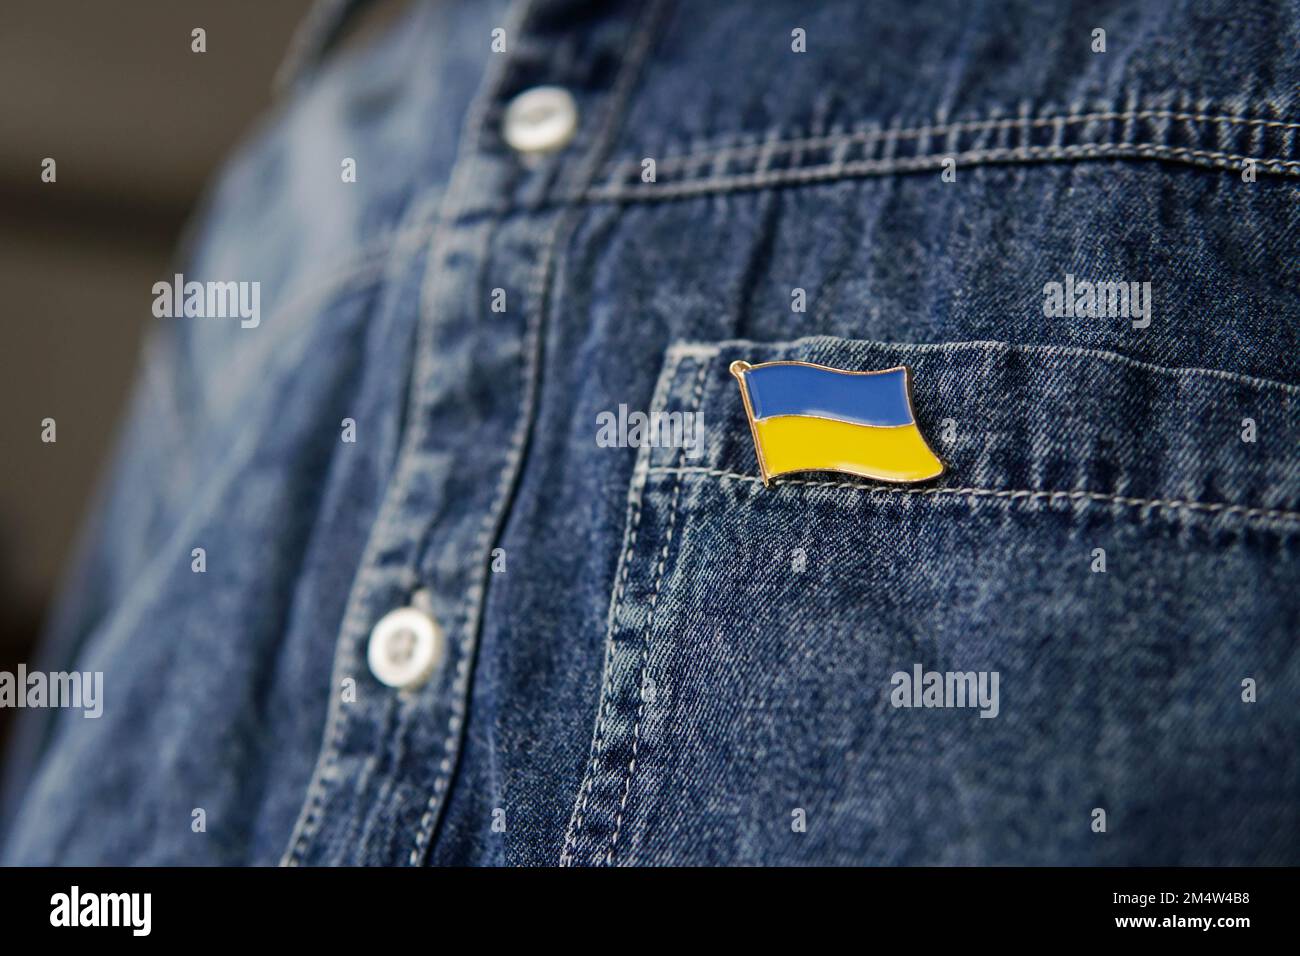 Ukrainian flag icon is pinned on blue jeans jacket. Support for Ukraine. War in Ukraine. Stock Photo